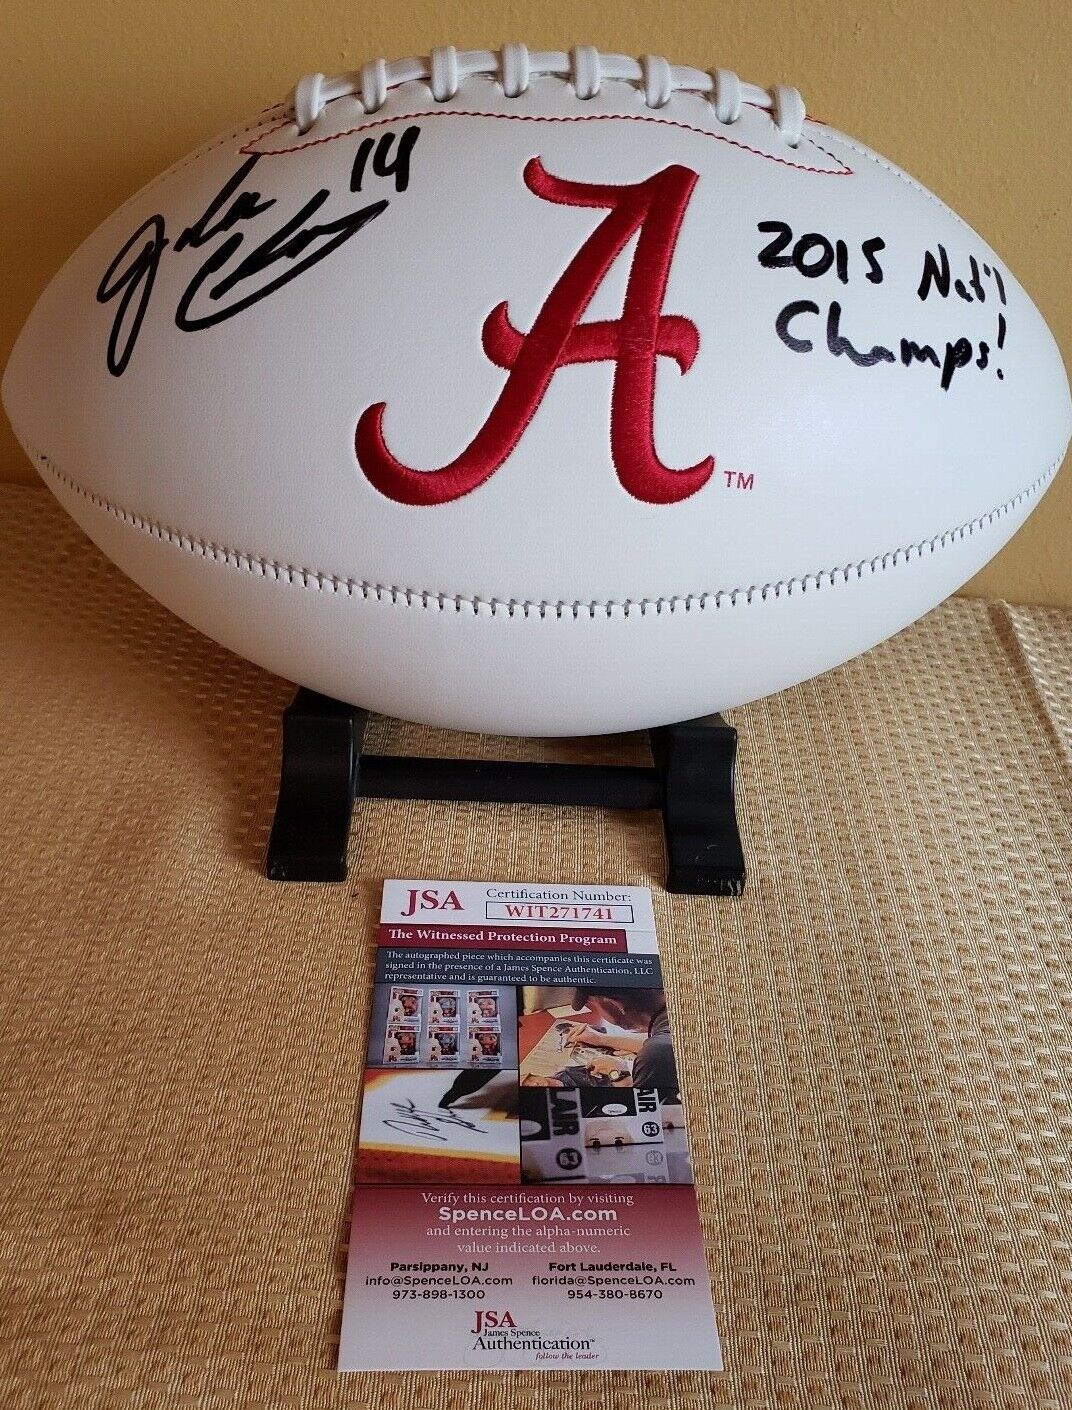 Jake Coker Autographed Signed Autograph Alabama Football 2015 Nat'l Champs! Includes JSA